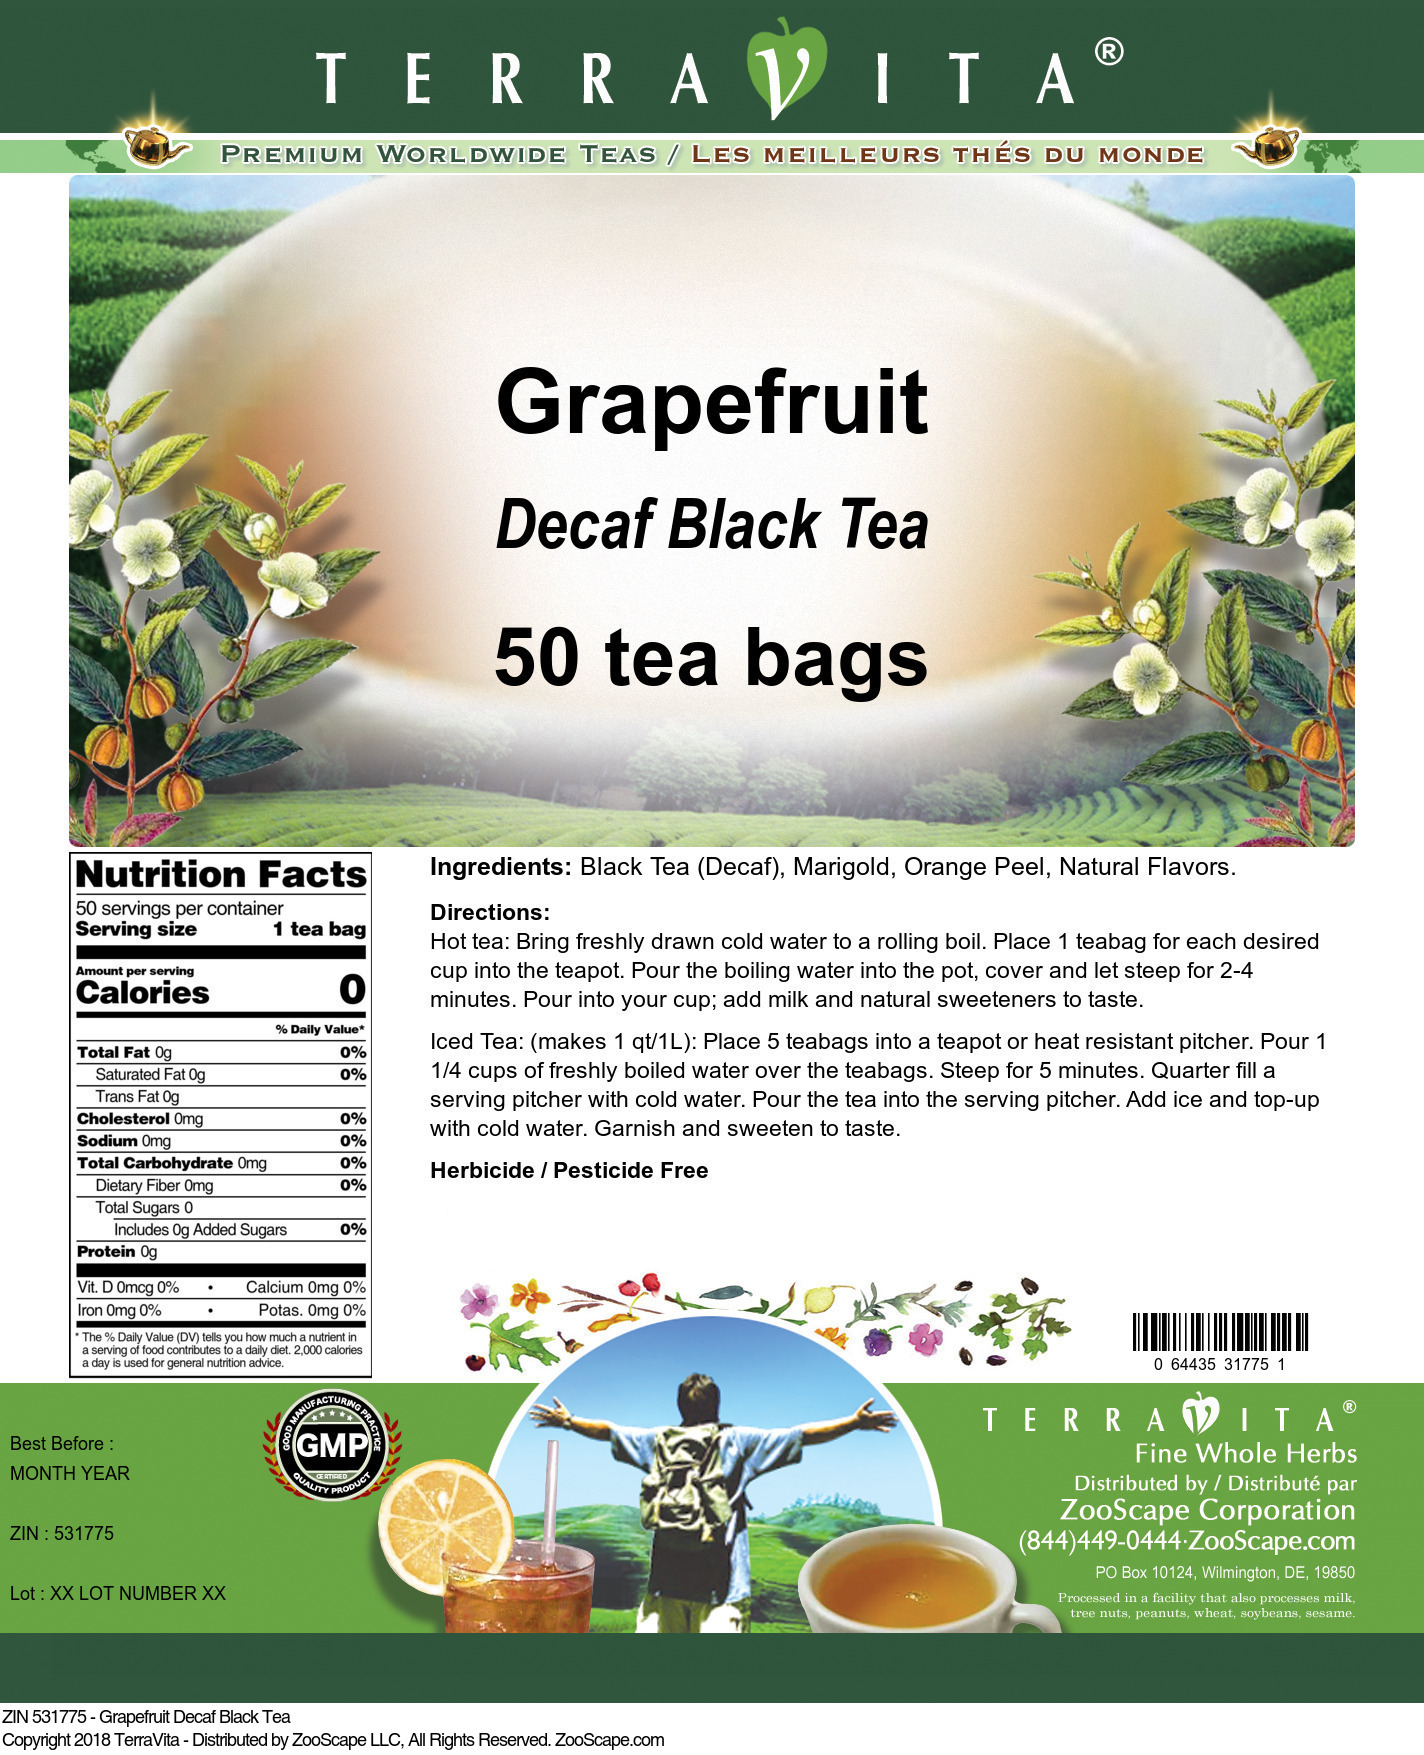 Grapefruit Decaf Black Tea - Label